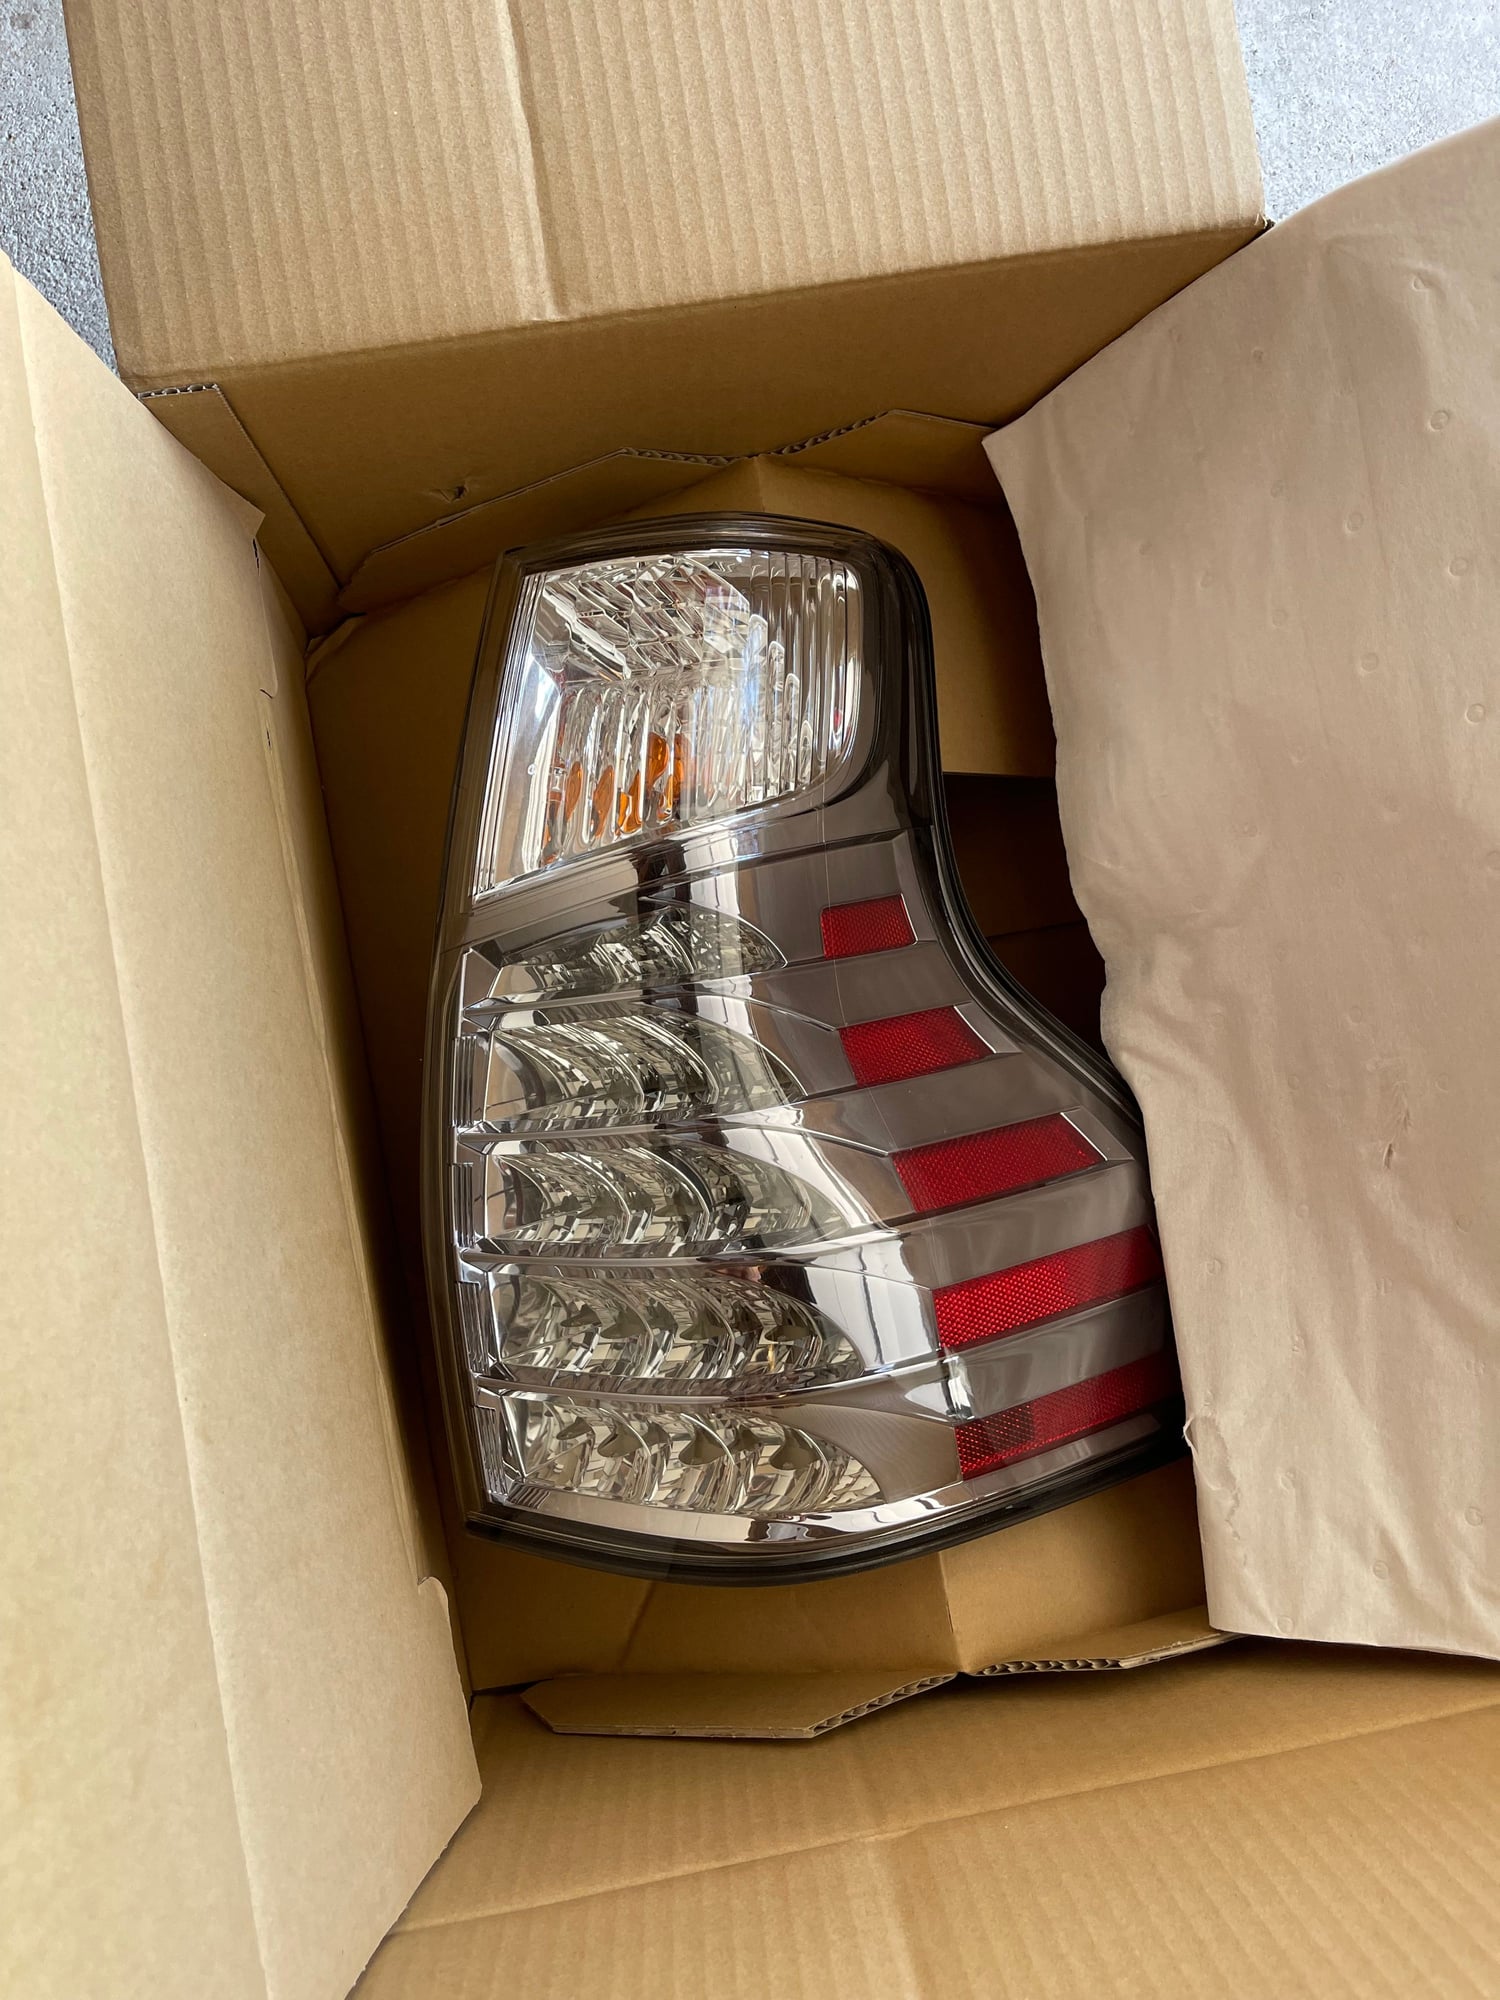 Lights - 2016 rear brake lamp housing - Used - 2014 to 2019 Lexus GX460 - Marietta, GA 30062, United States